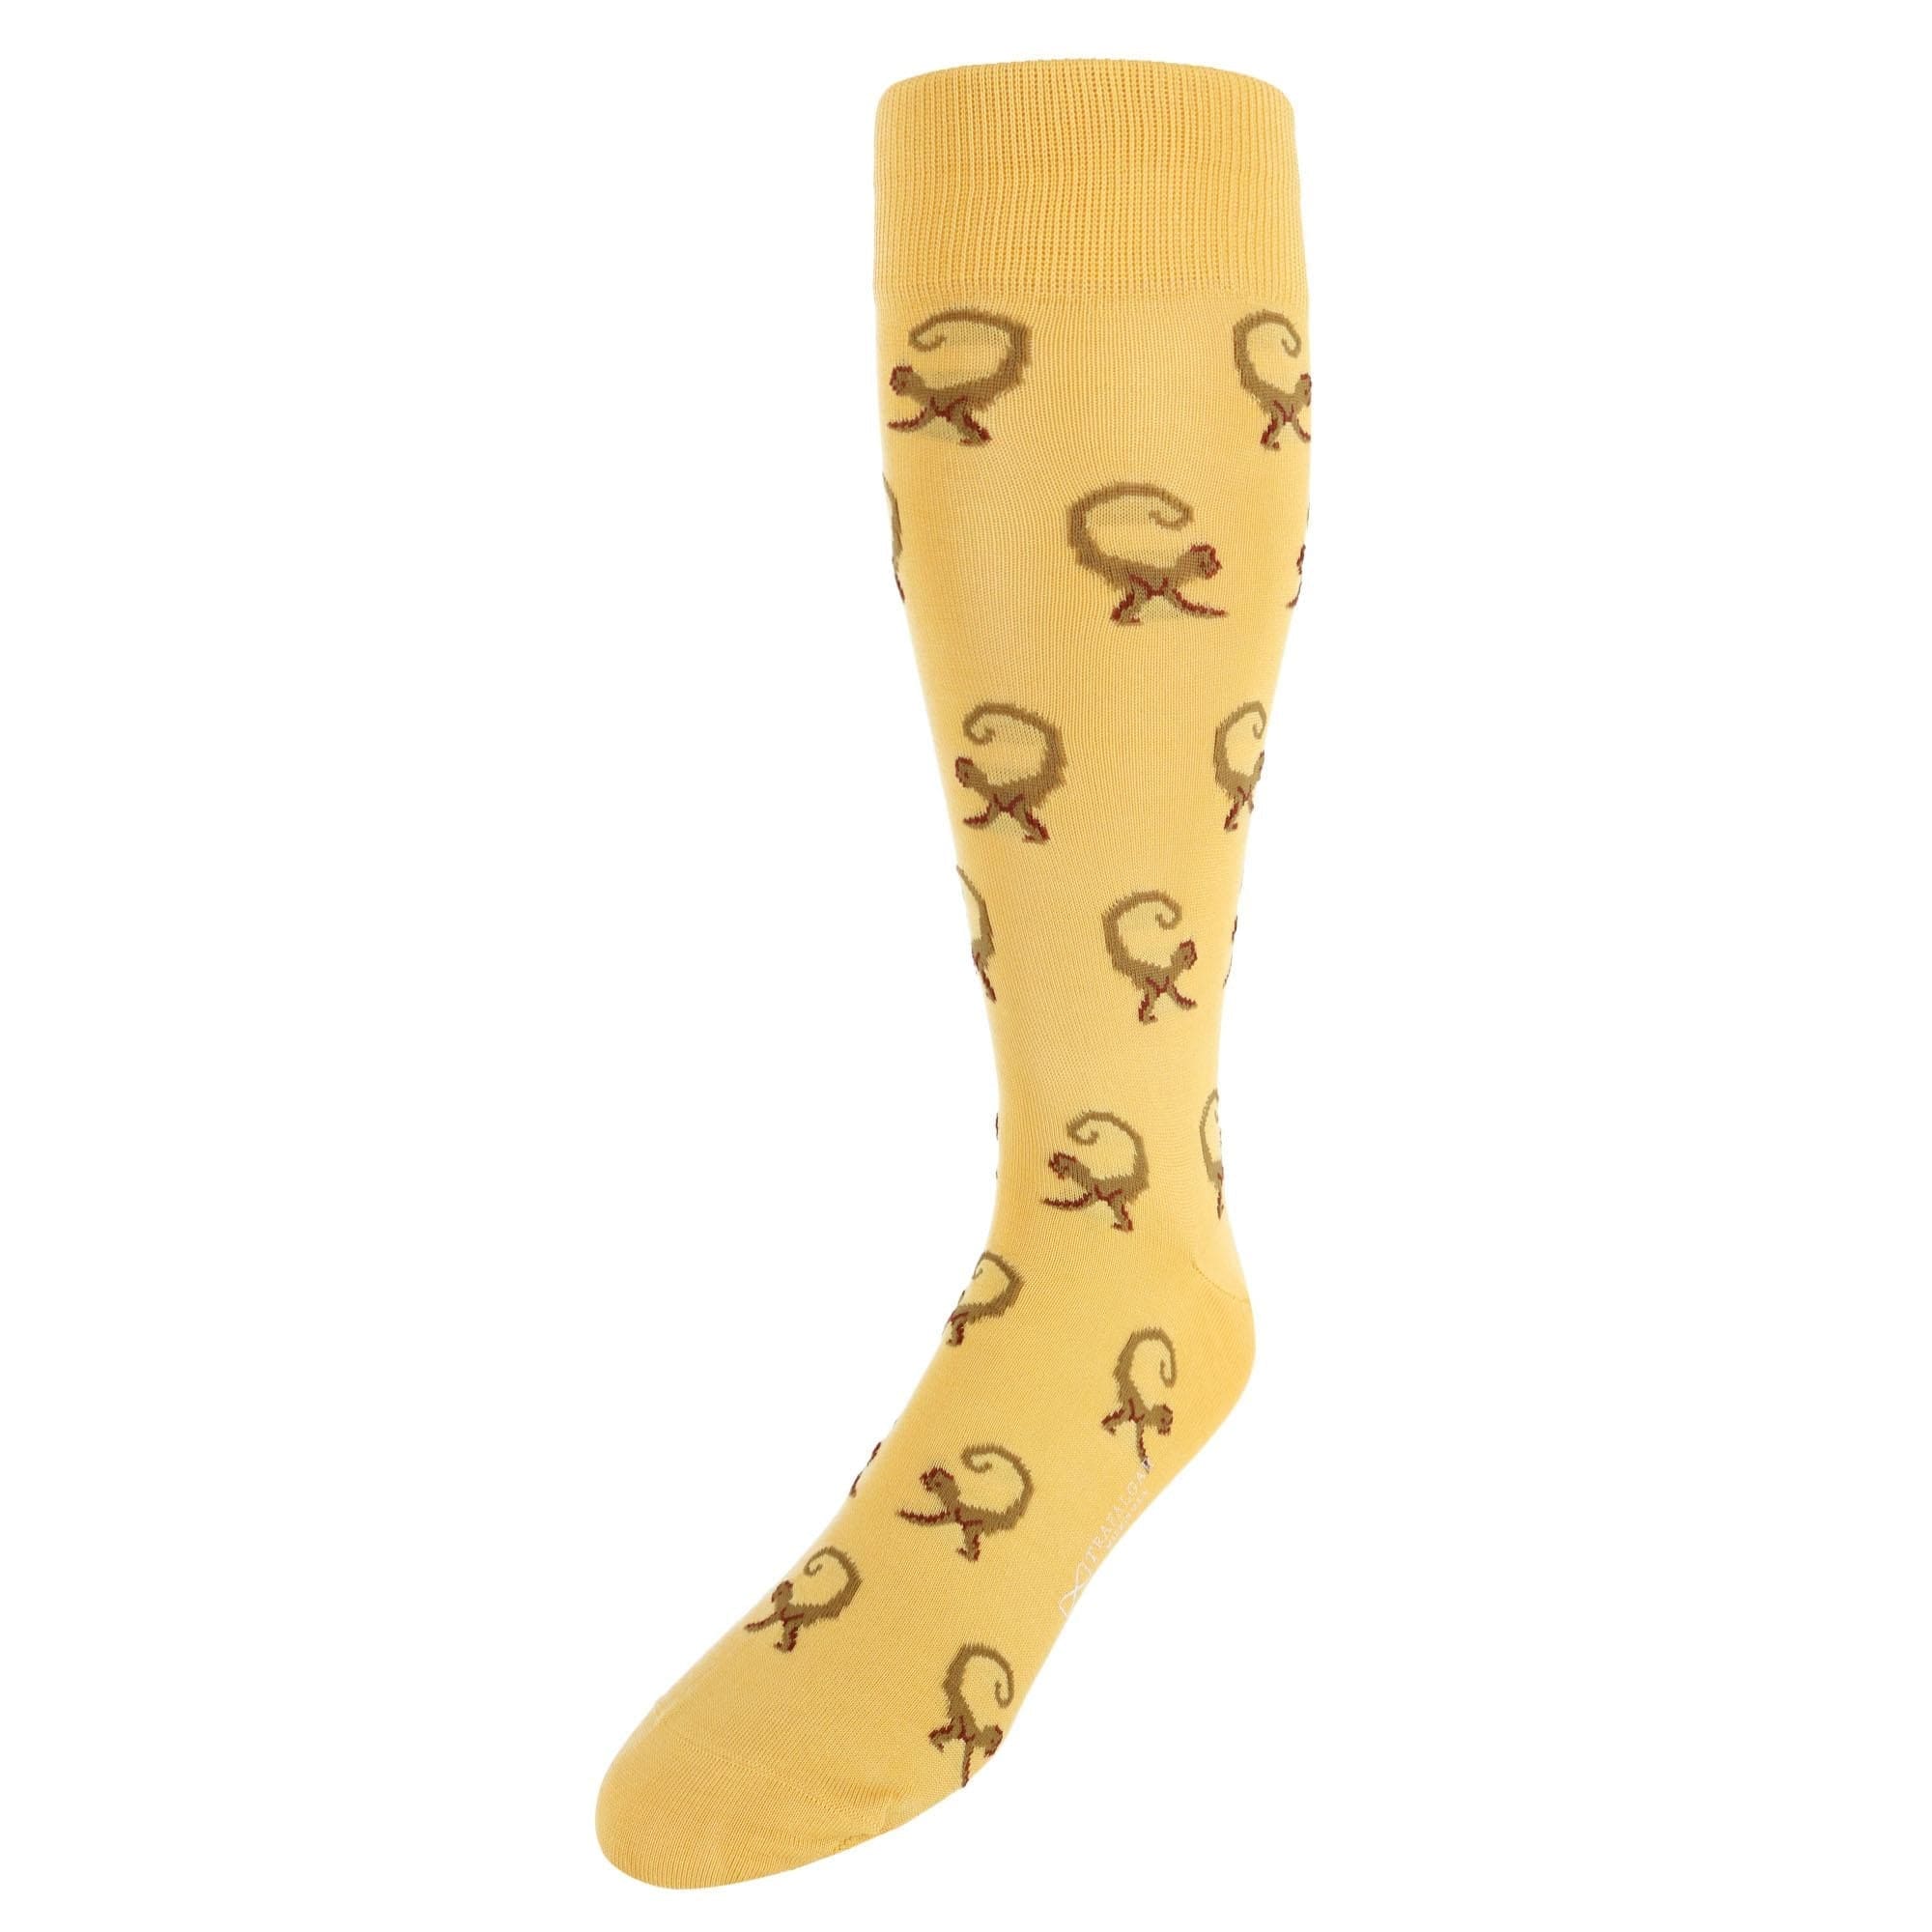 Caesar Monkey Mid-Calf Mercerized Cotton Socks by Trafalgar Men's